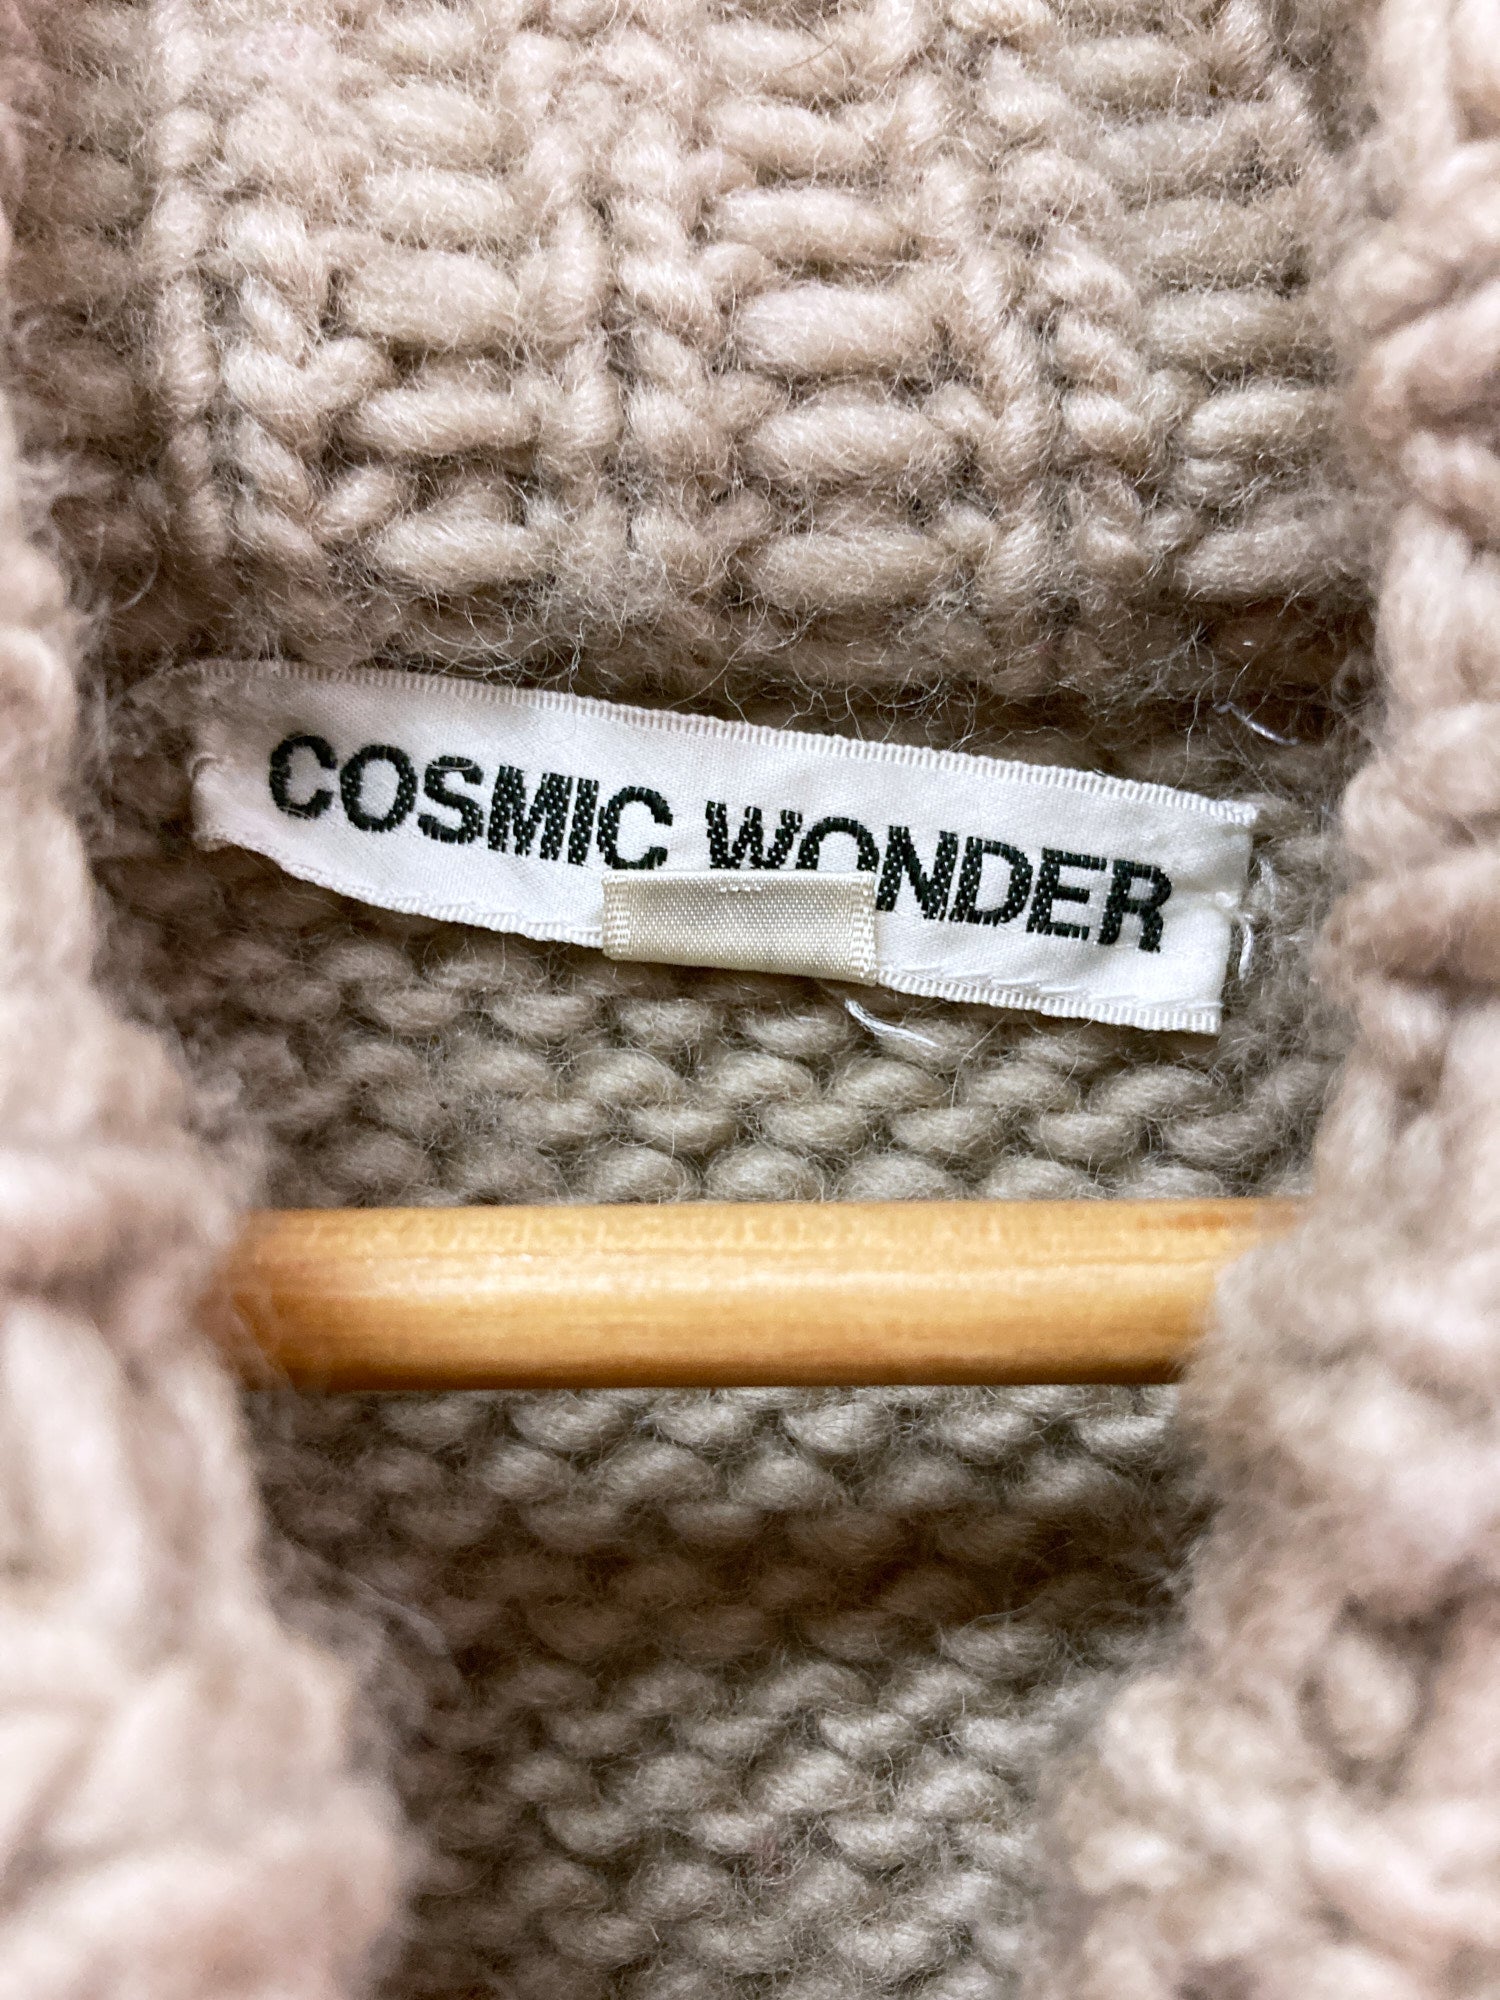 Cosmic Wonder 1990s-2000s beige wool shawl collar jumper with big plastic button